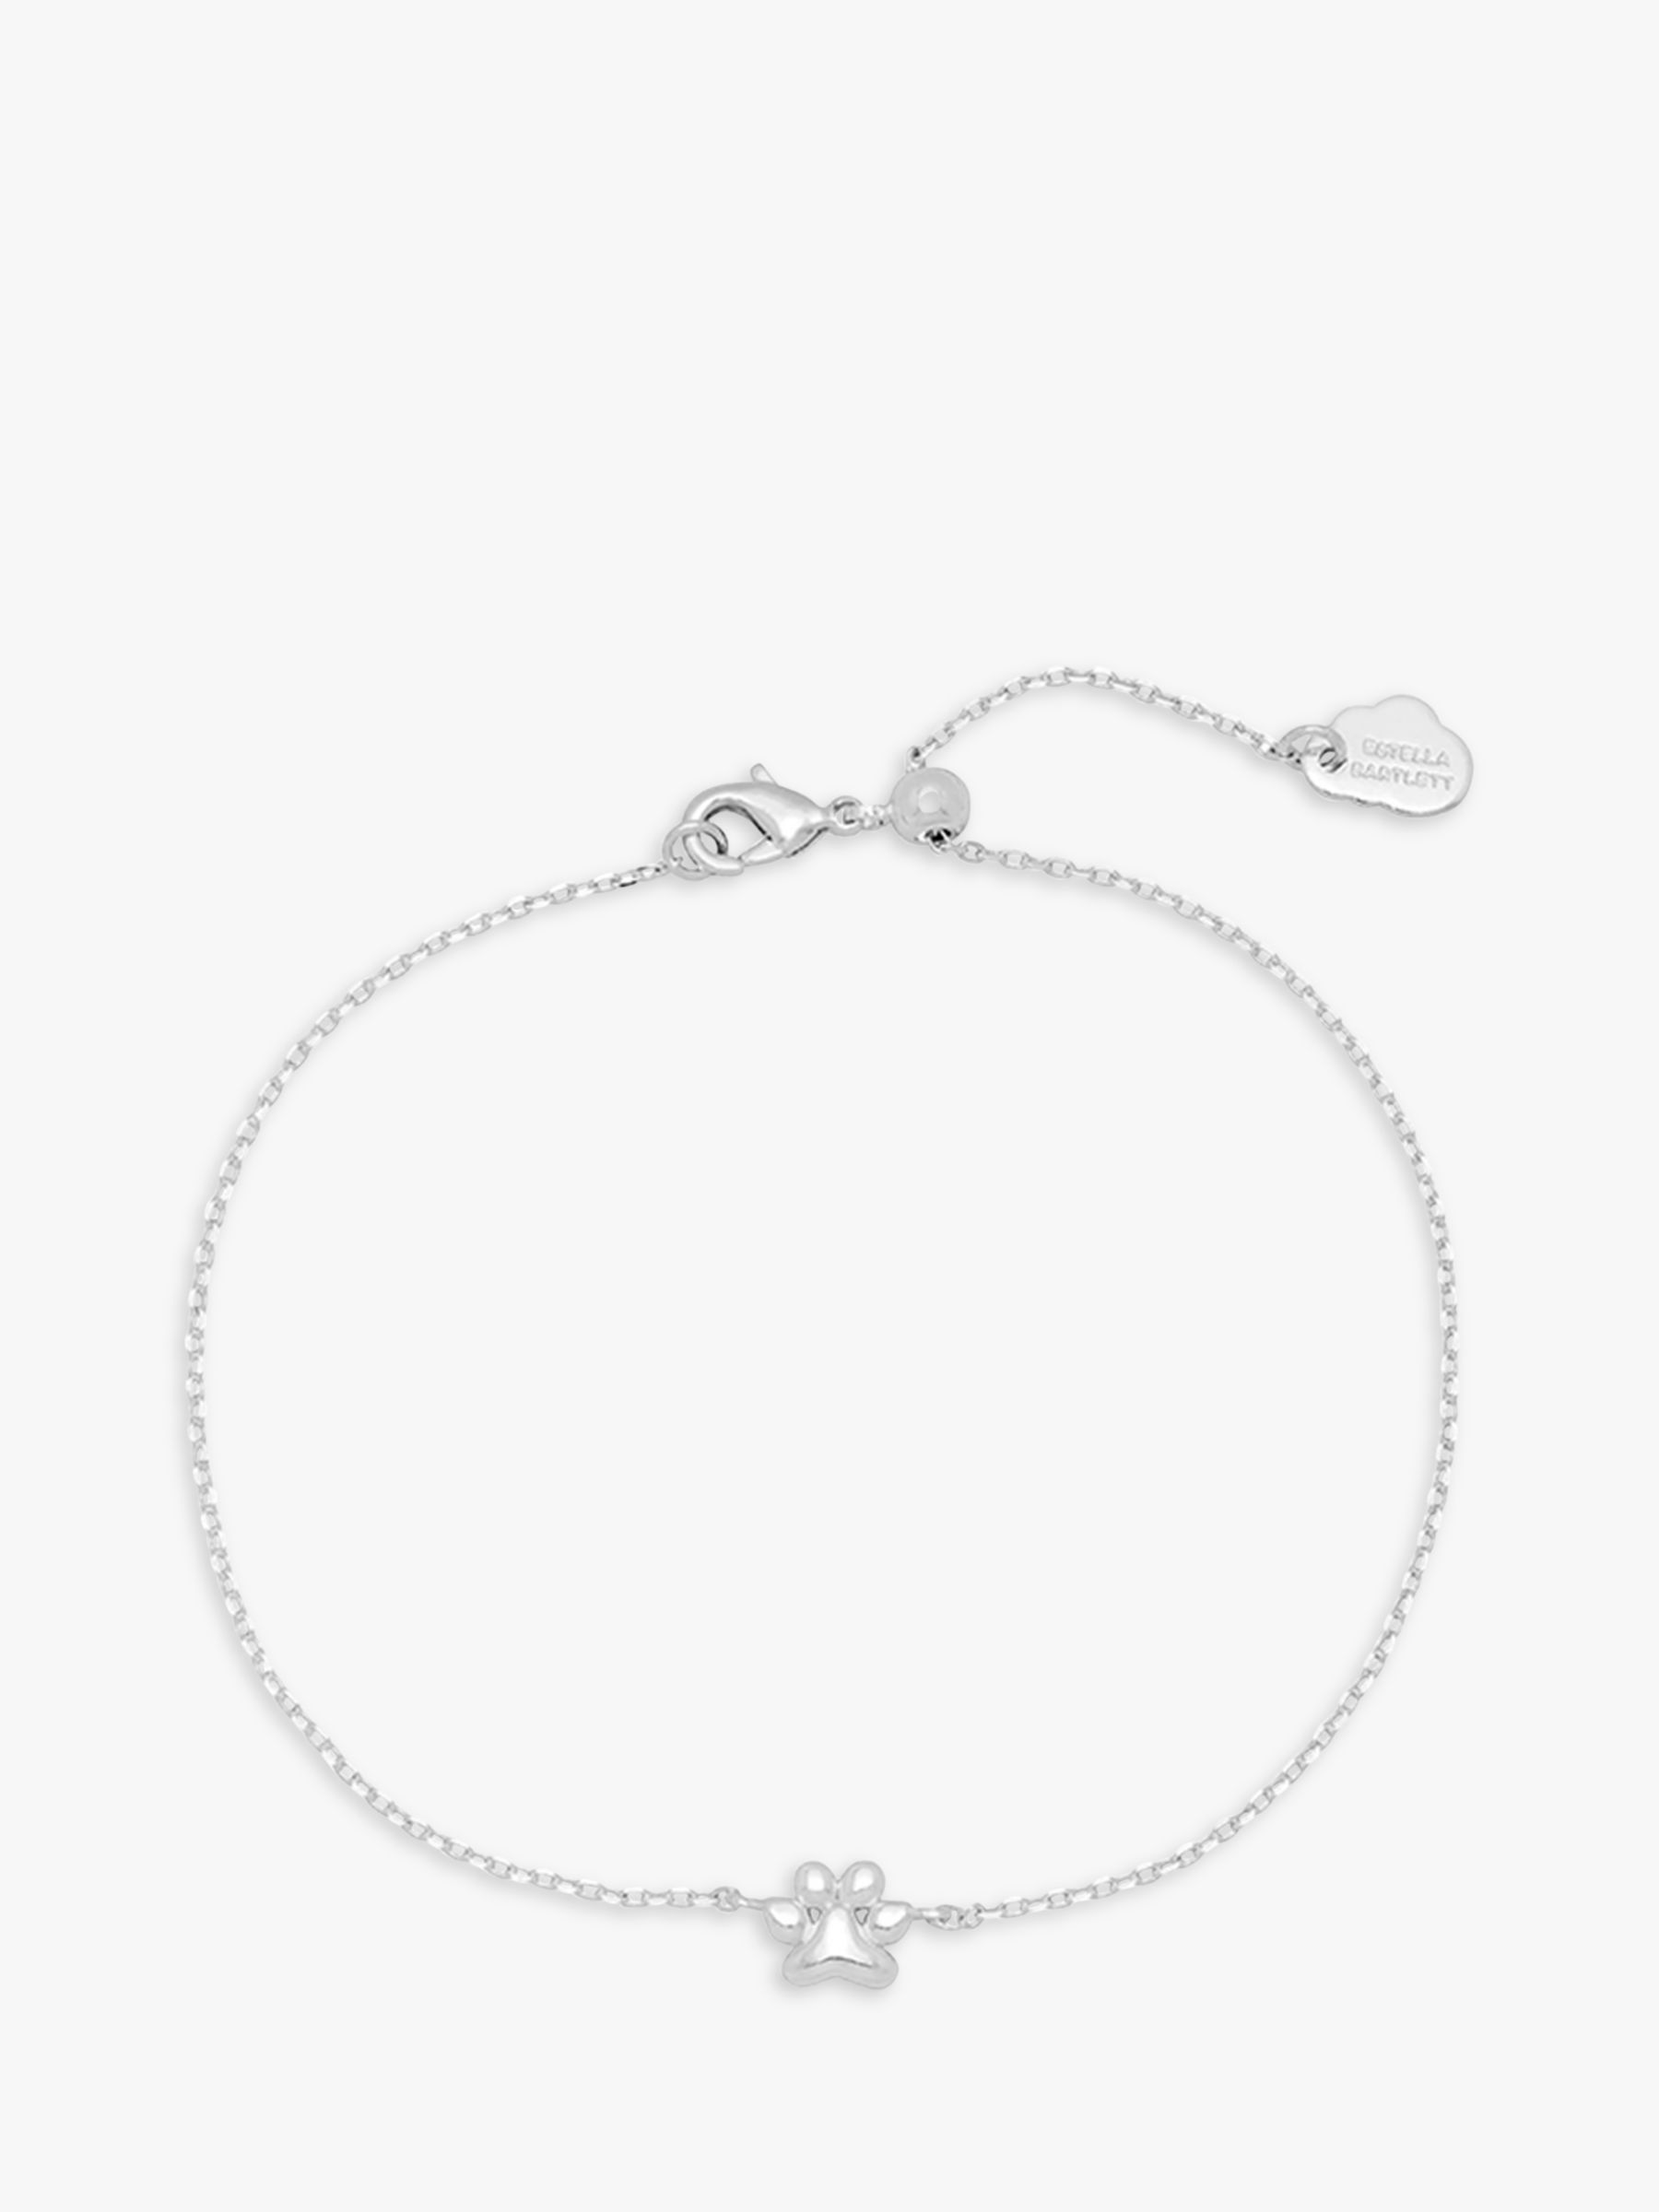 Silver Charm Bartlett Paw Bracelet, Estella